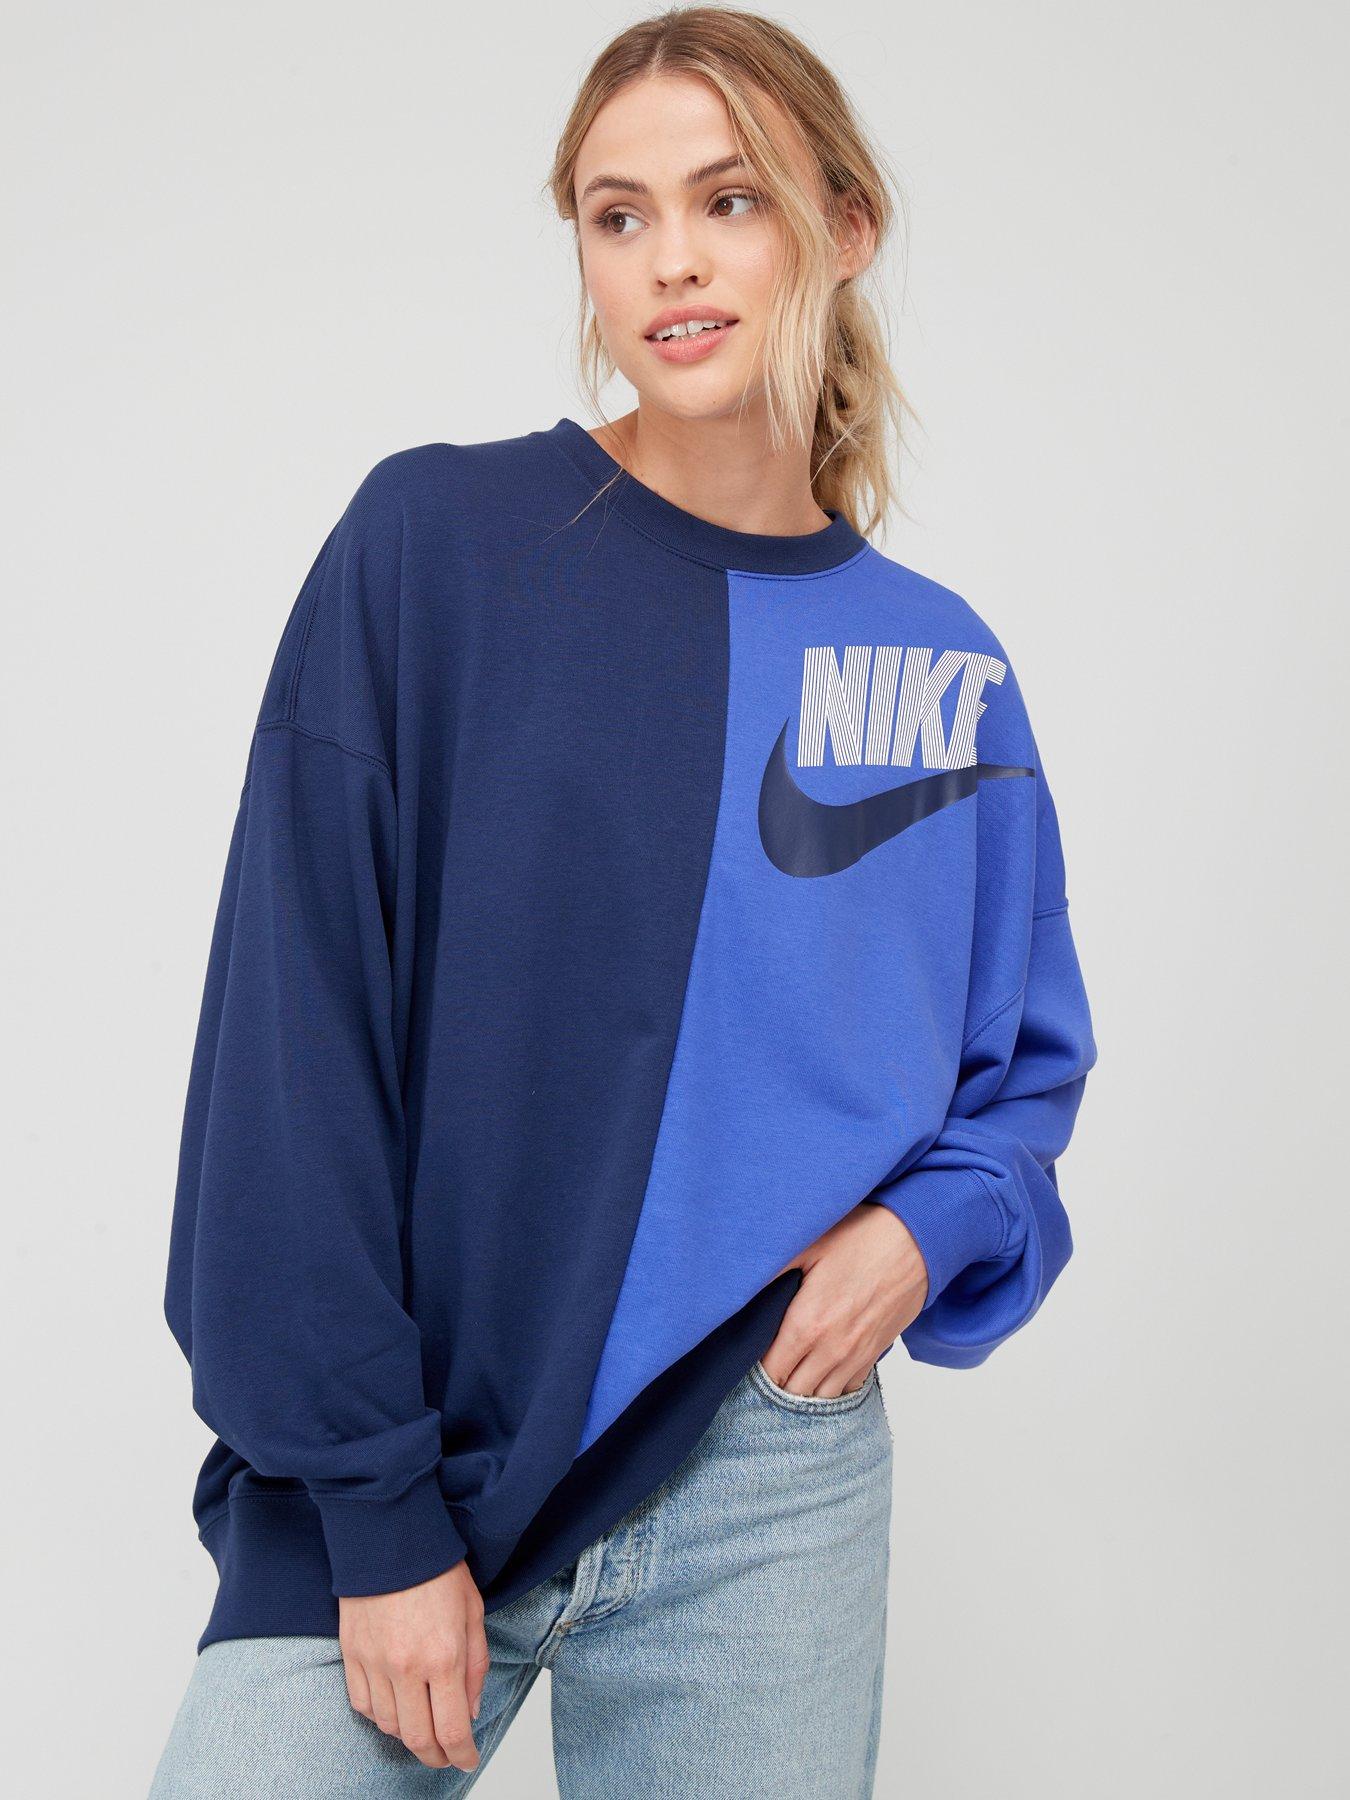 discount 78% Blue L WOMEN FASHION Jumpers & Sweatshirts Sweatshirt Fleece Quechua sweatshirt 